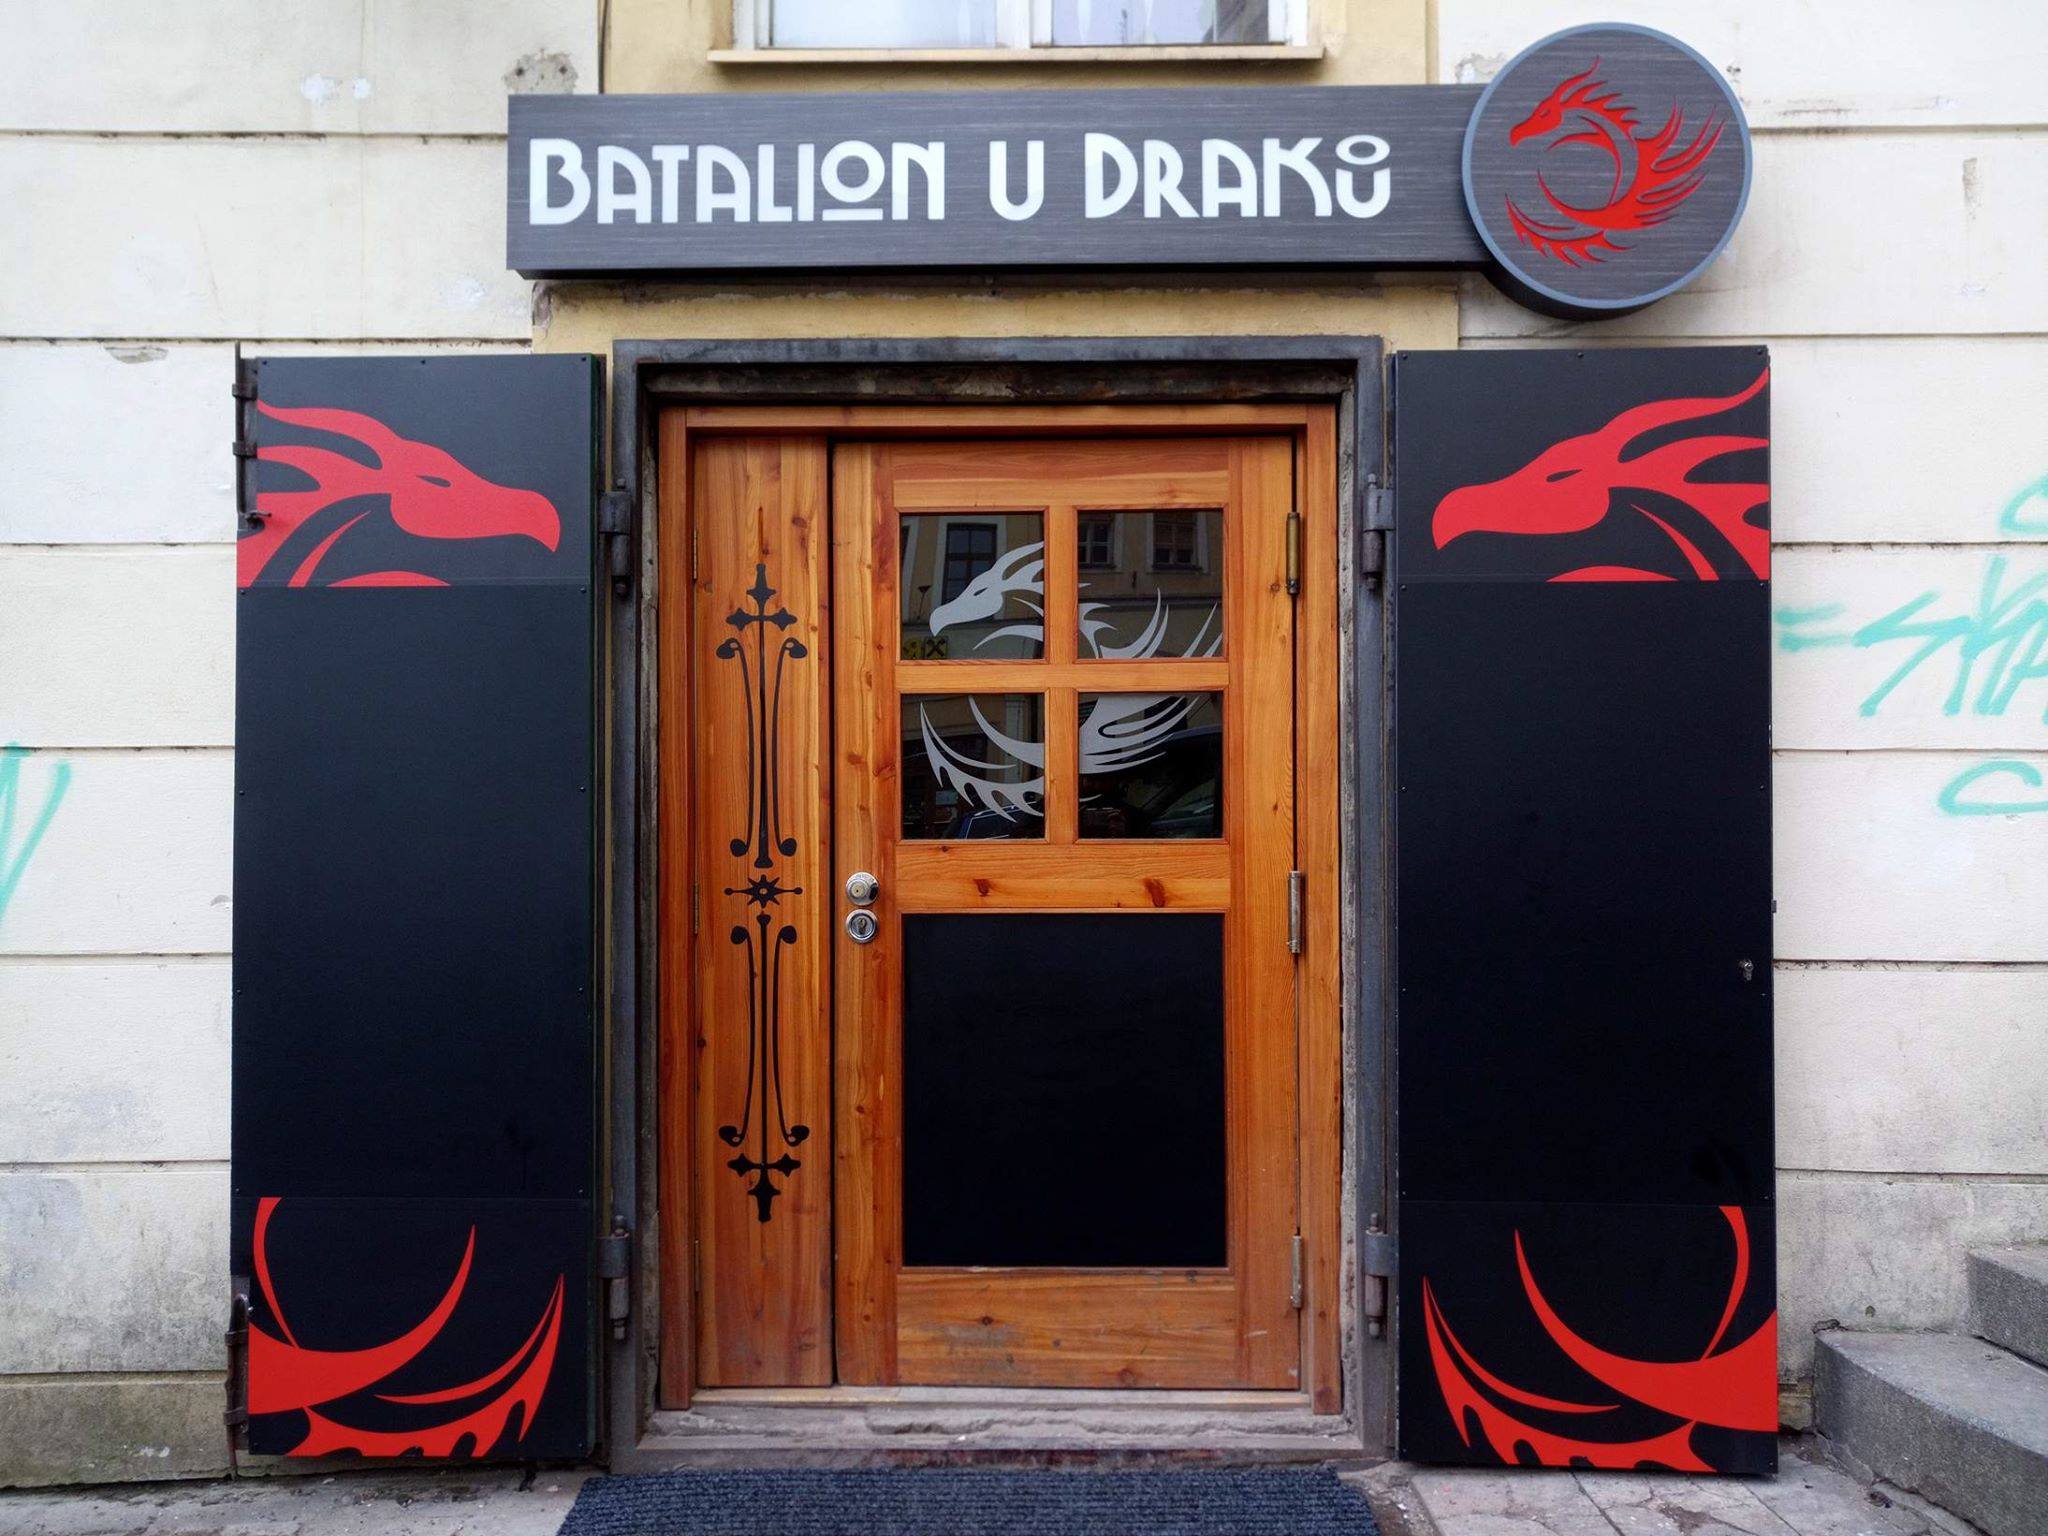 Batalion u Draků - polep a design obchodu - 3D logo